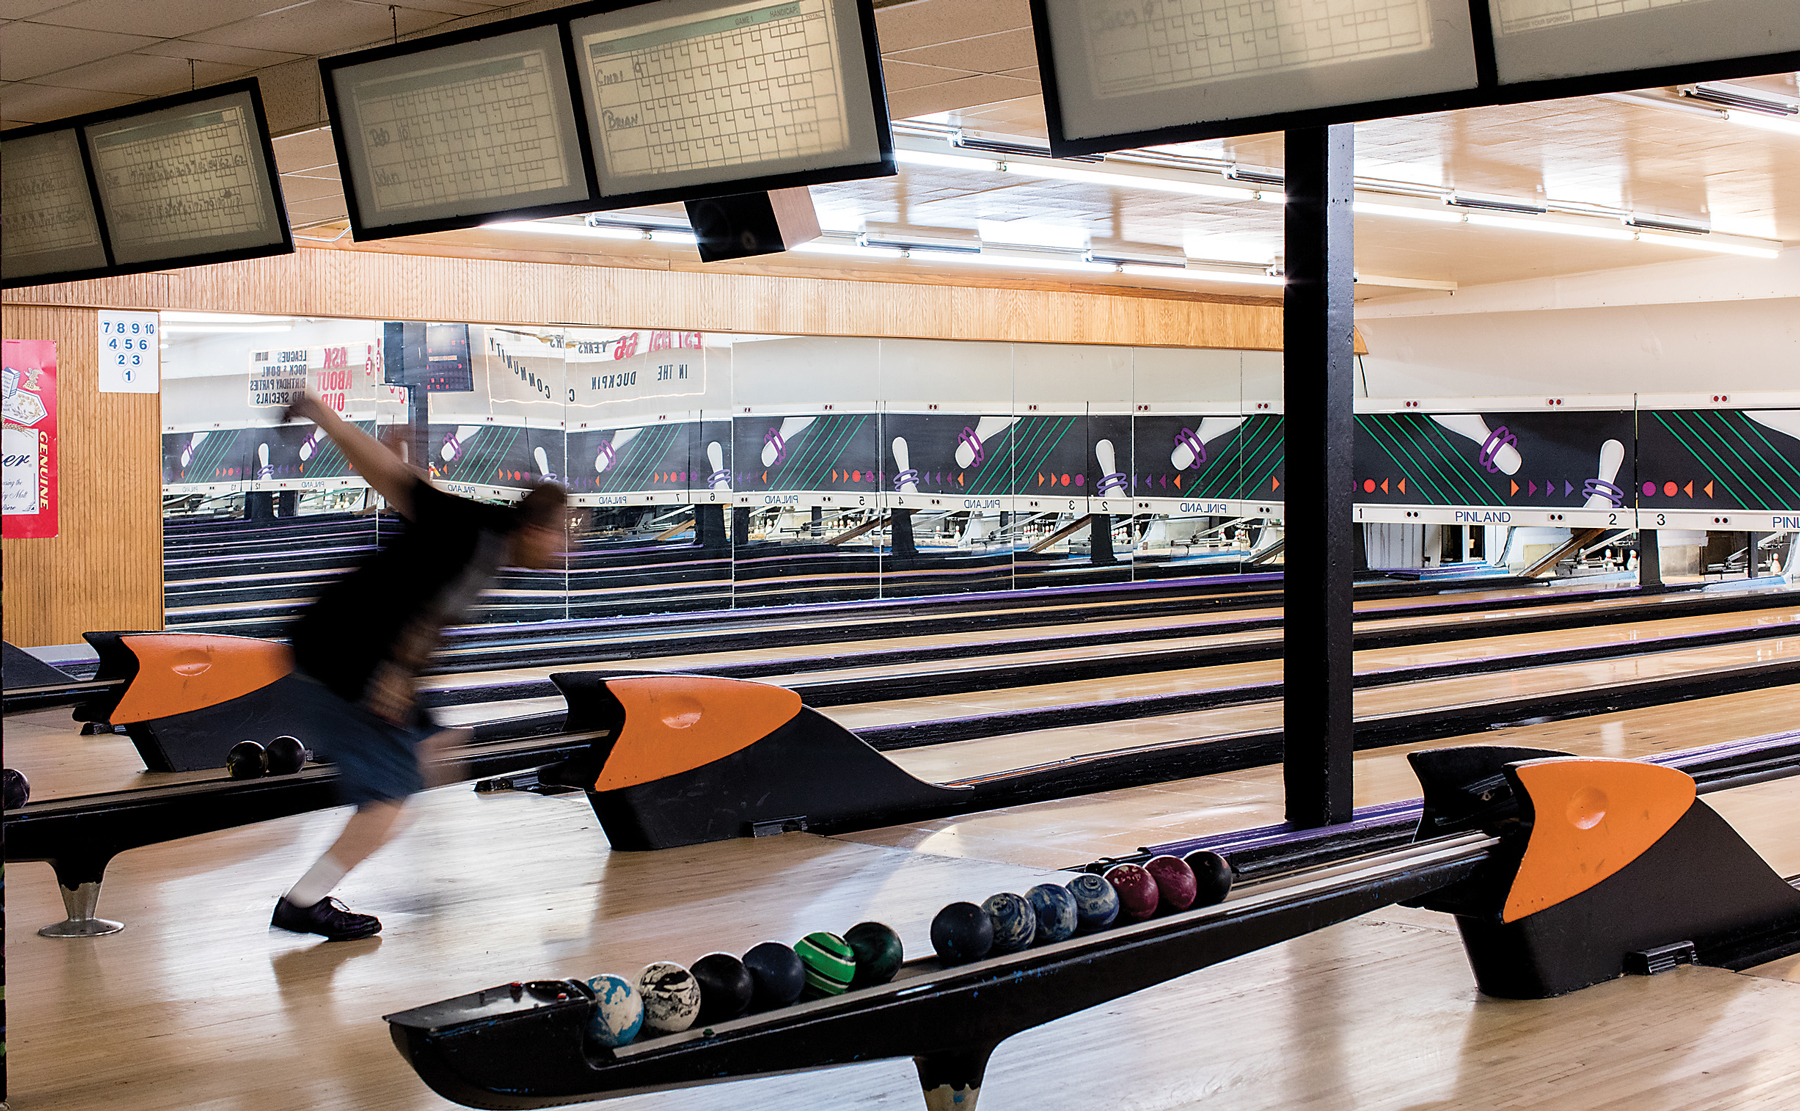 100 Duckpin bowling ideas  bowling, duck pins, candlepin bowling